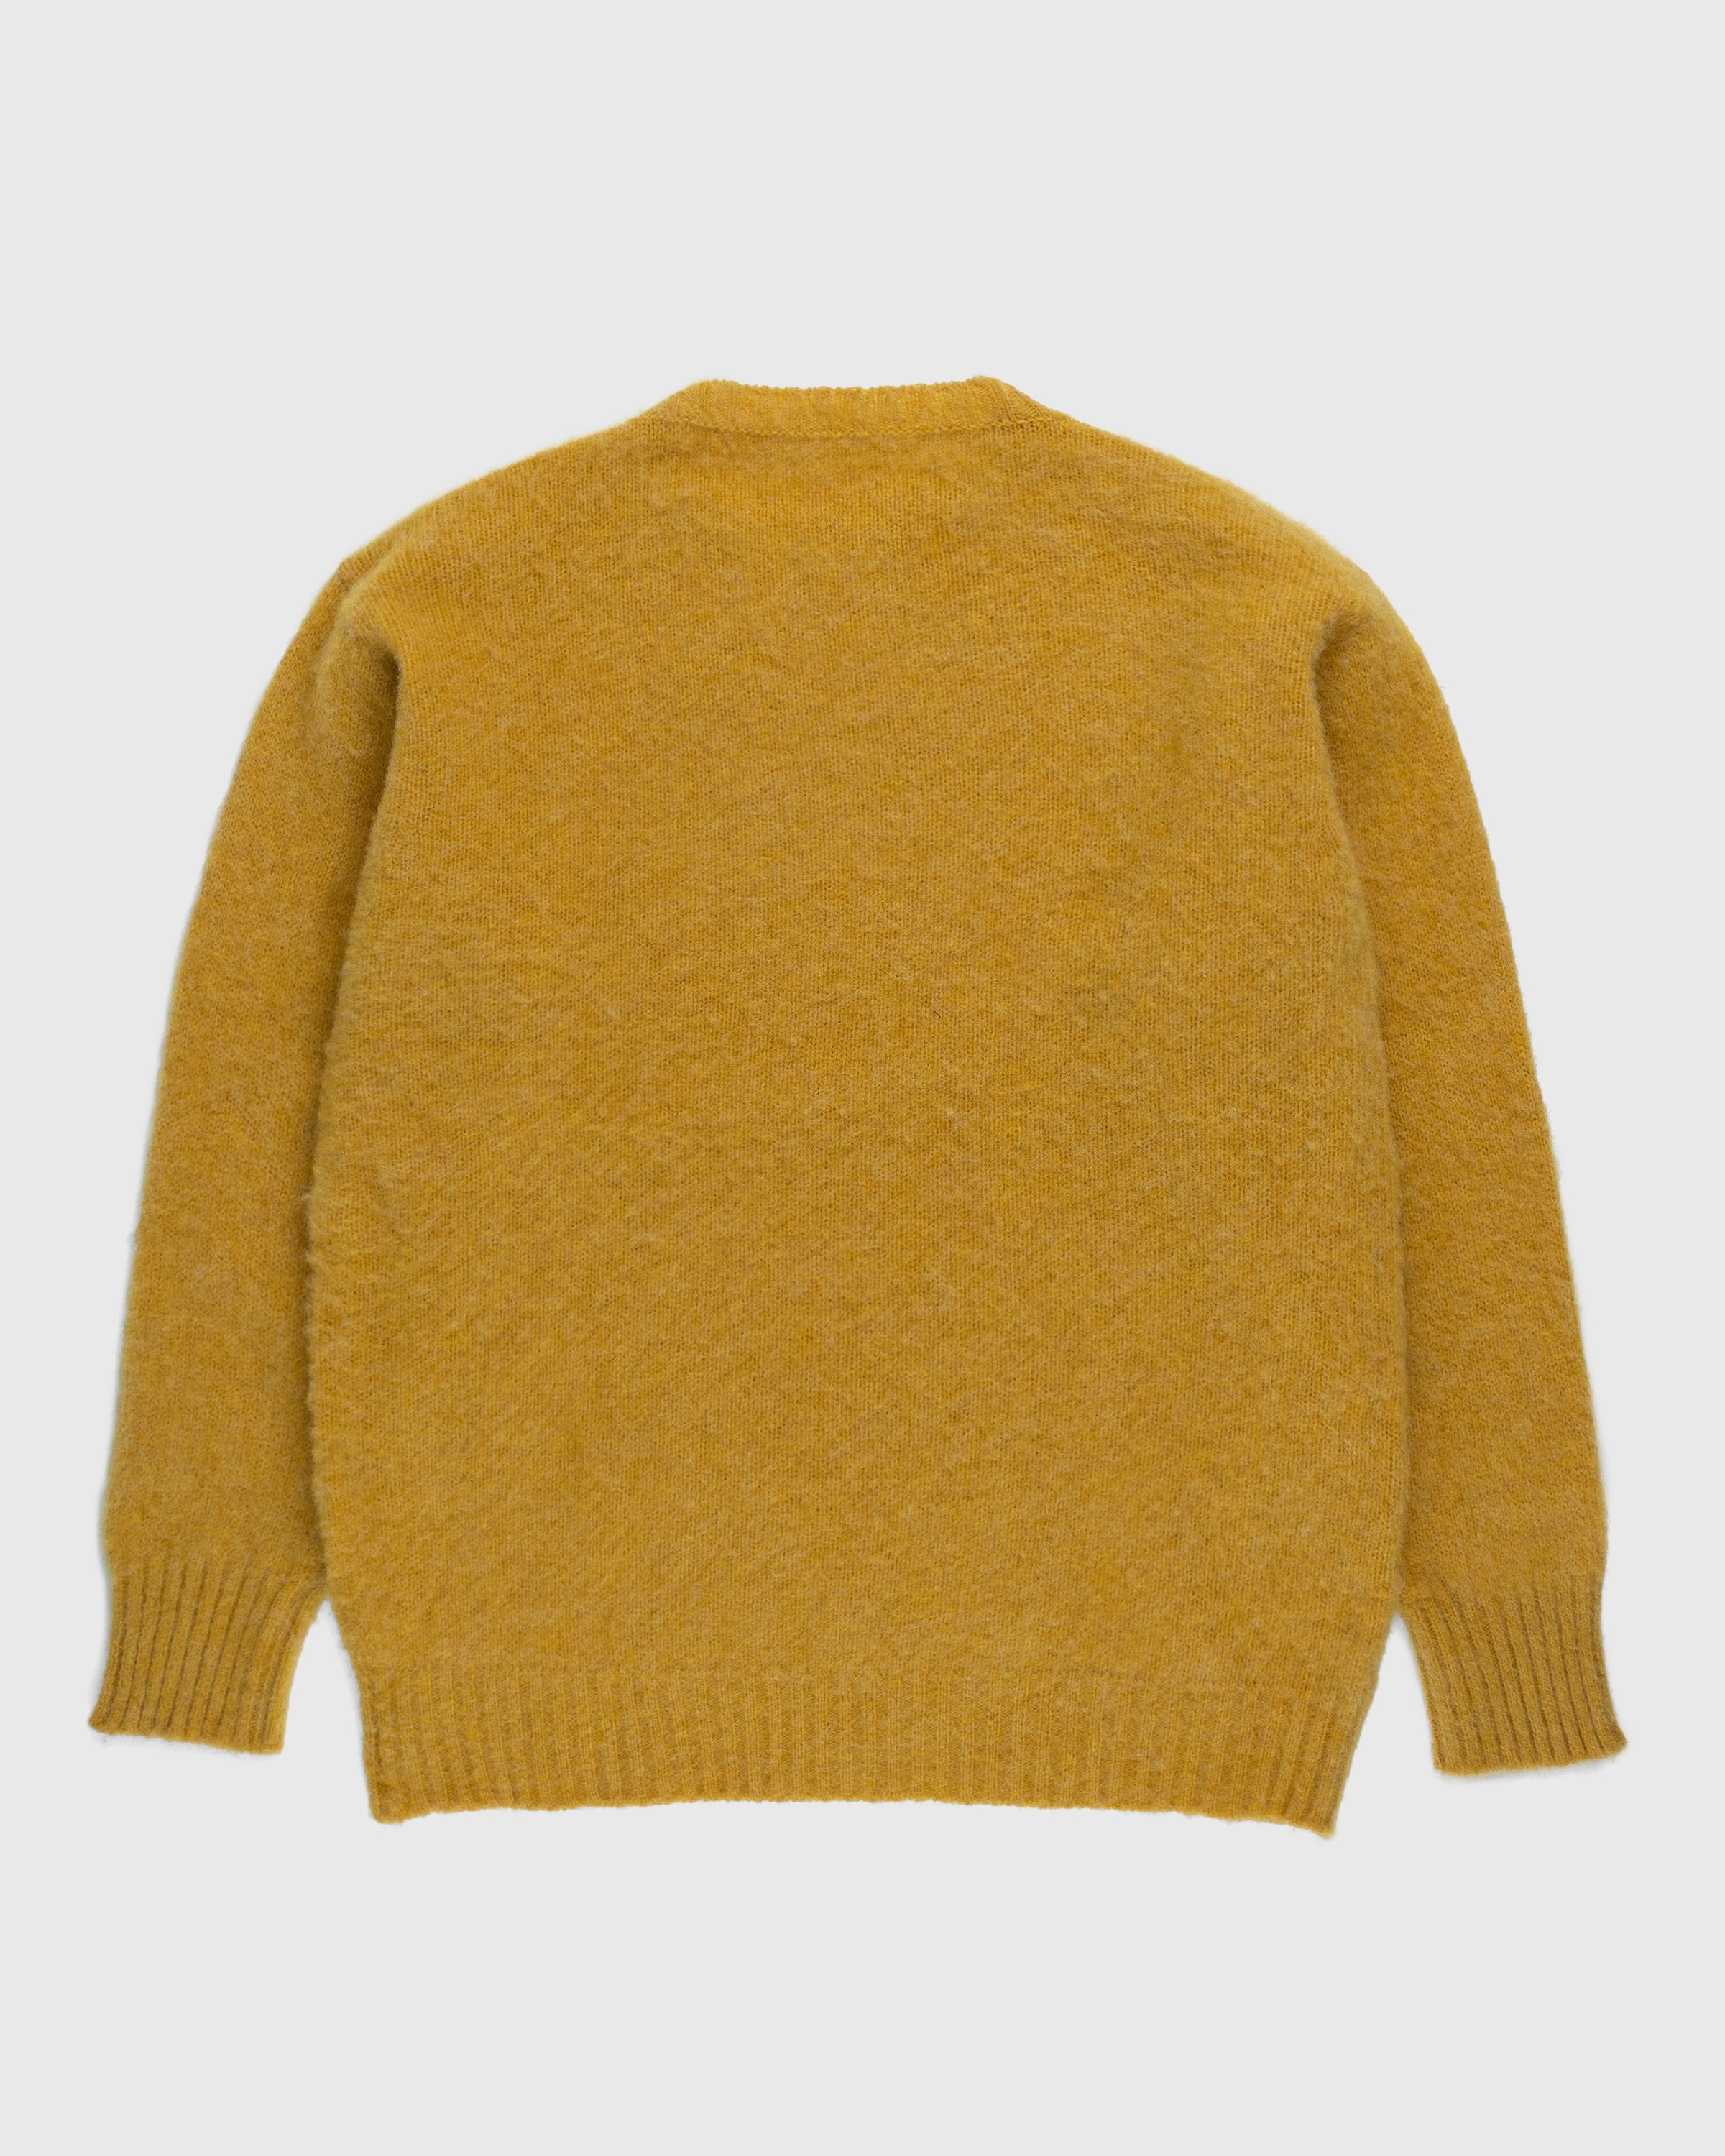 J. Press x Highsnobiety – Shaggy Dog Solid Sweater Yellow - Crewnecks - Yellow - Image 2